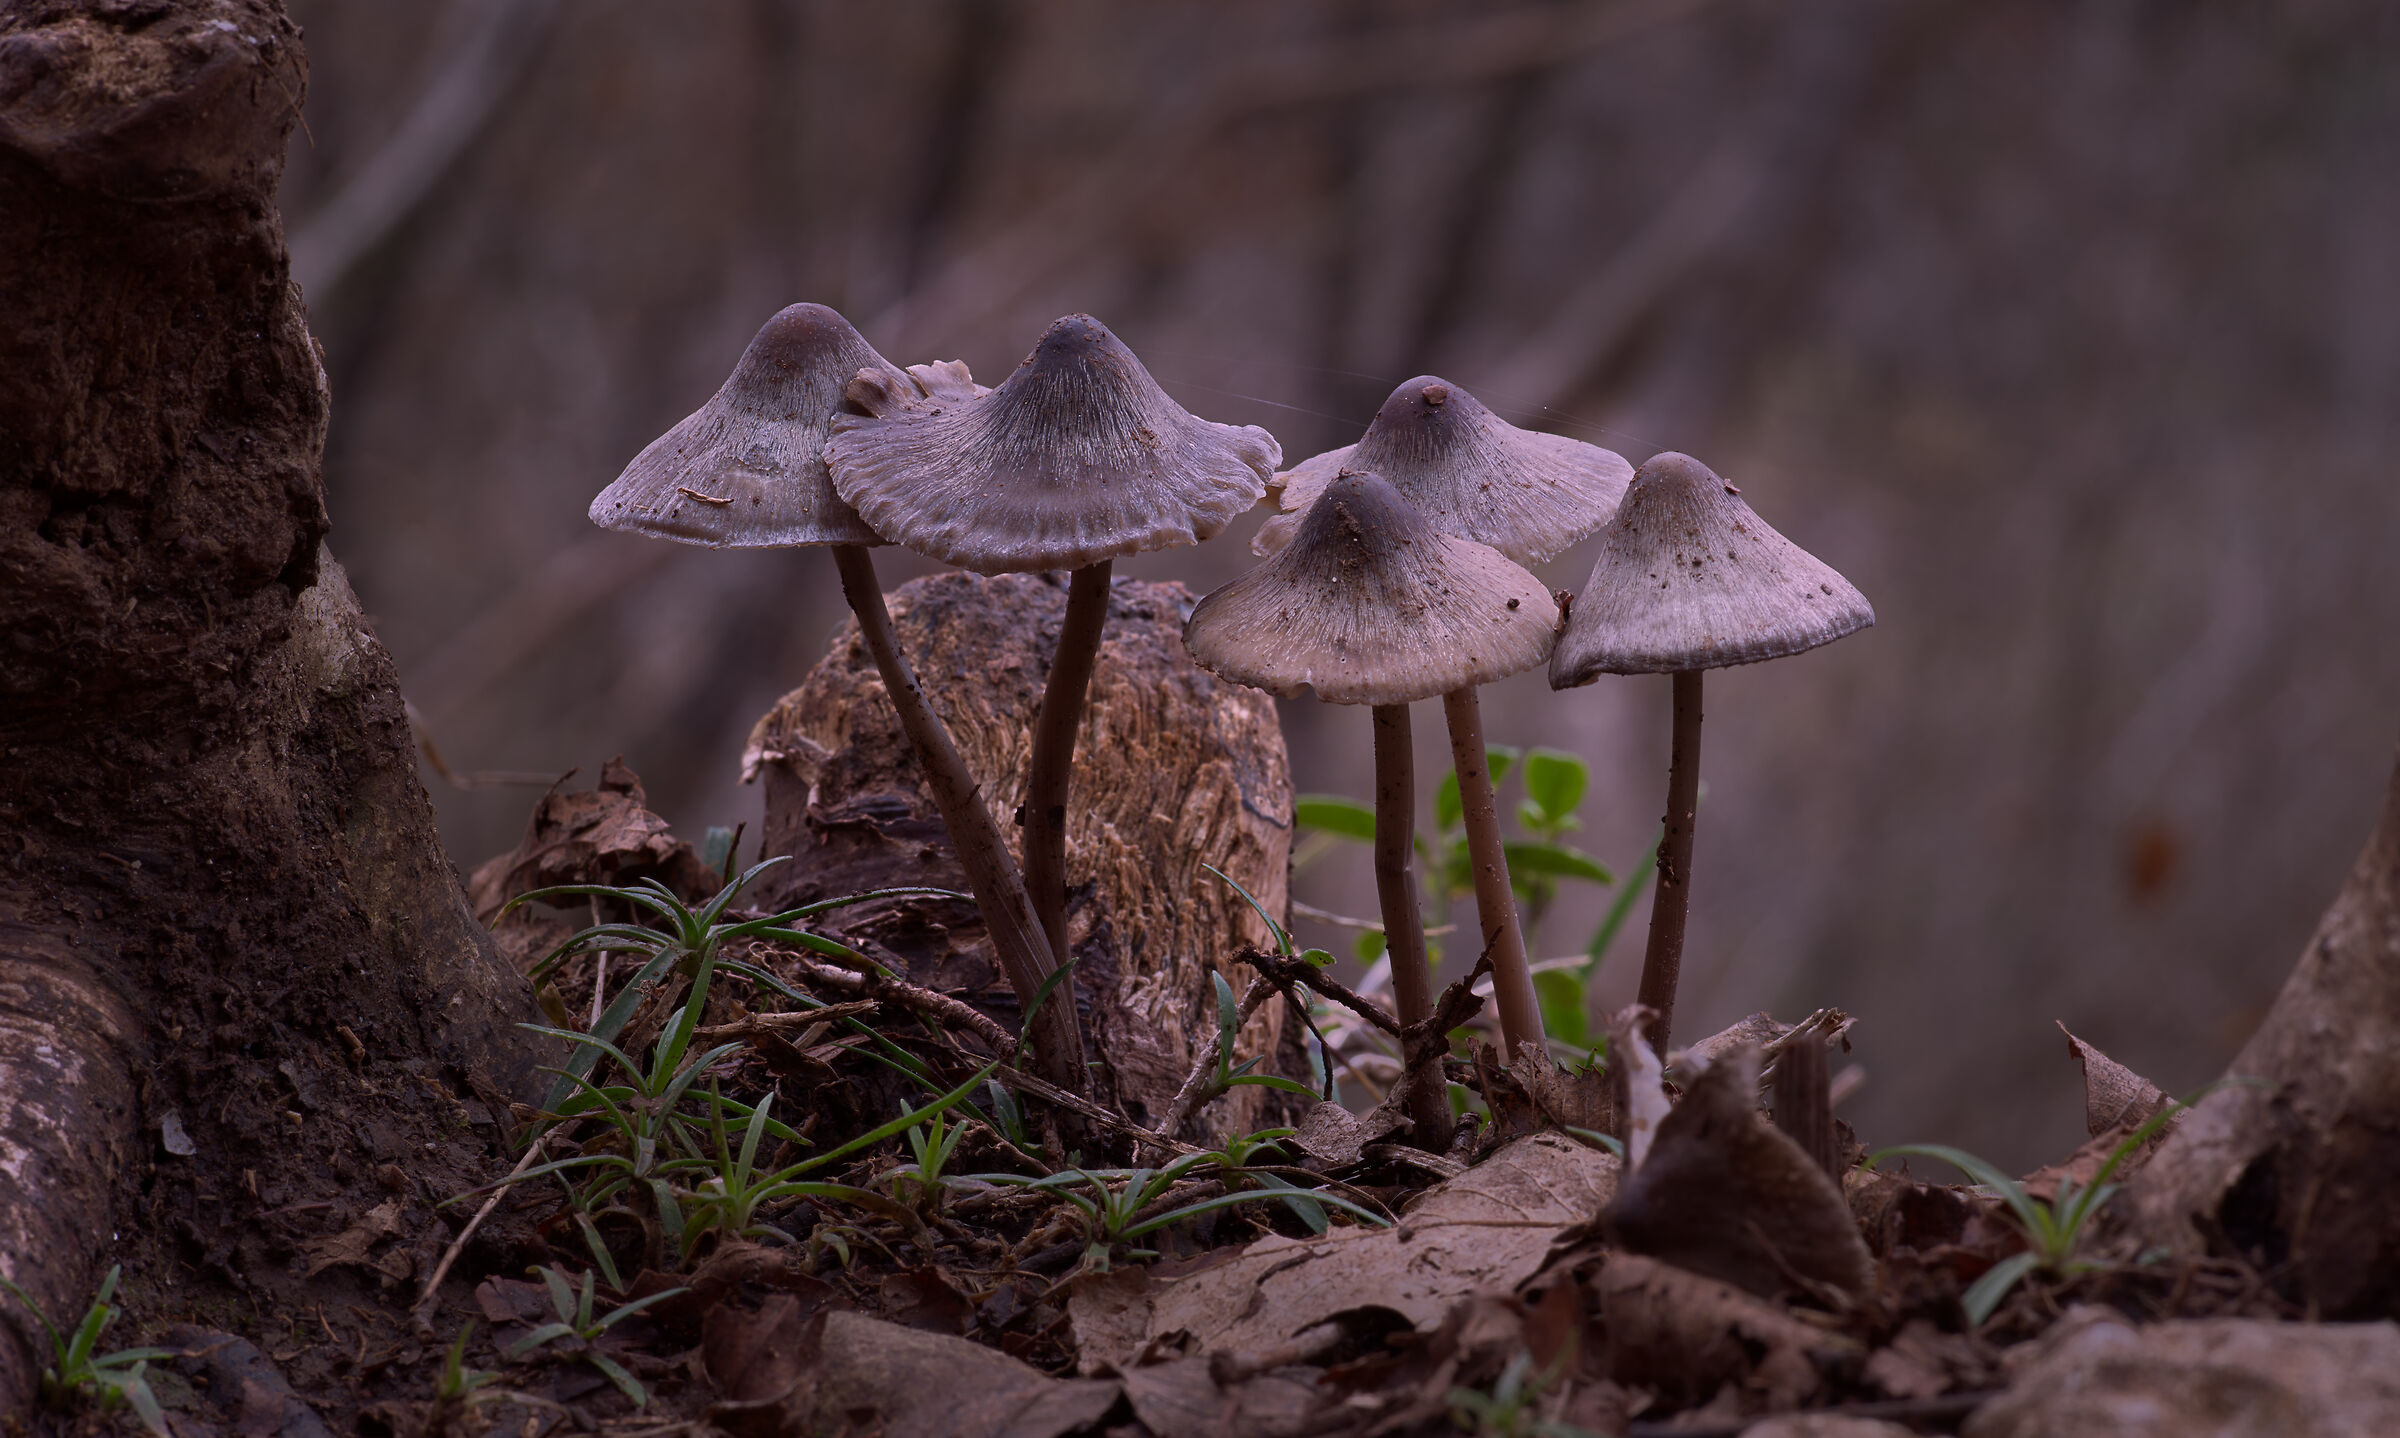 Forest mushrooms...